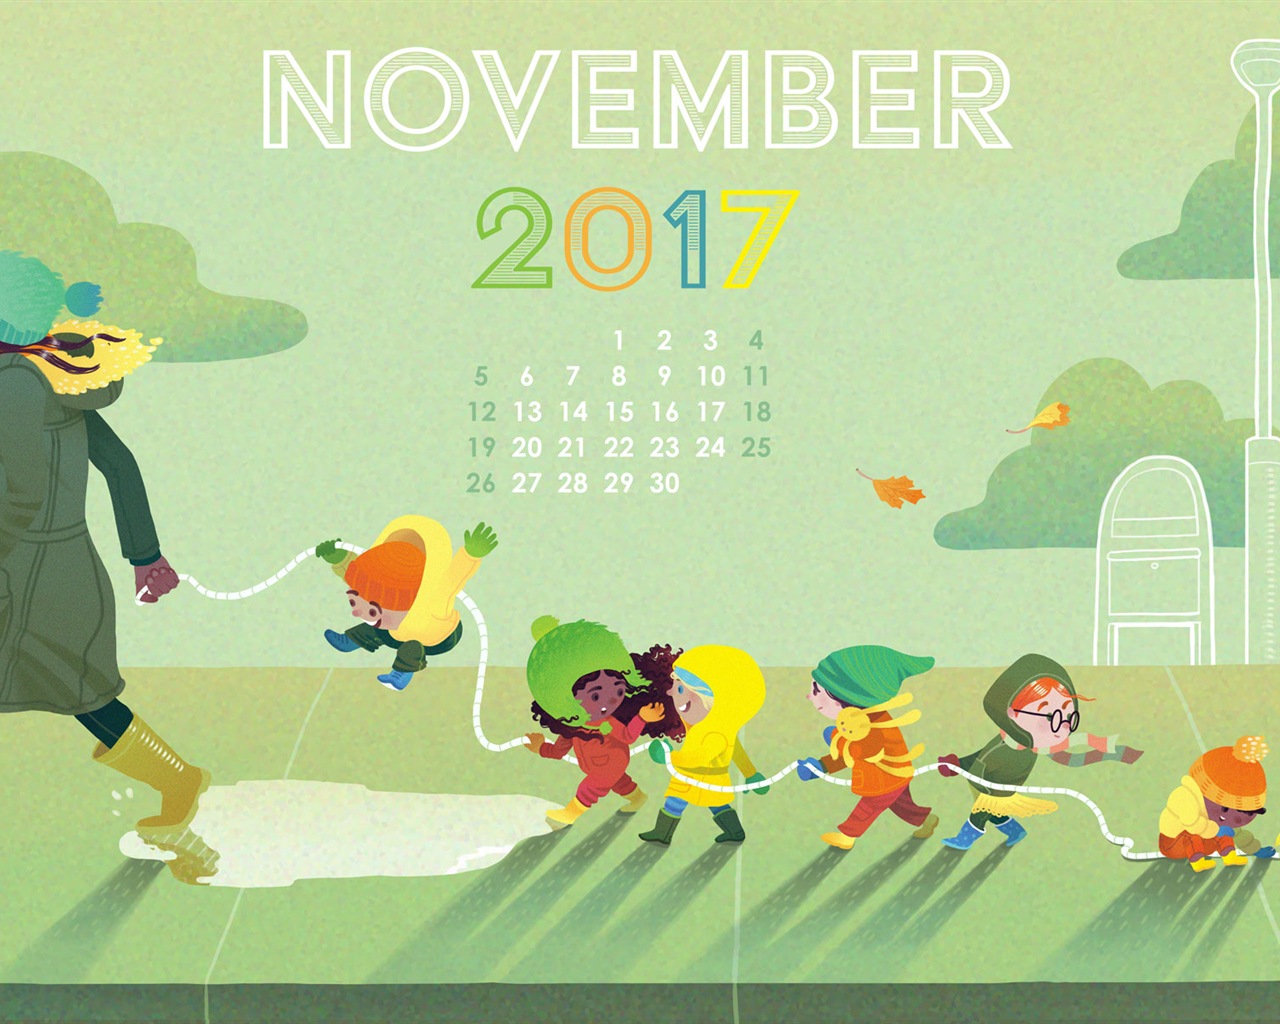 November 2017 calendar wallpaper #20 - 1280x1024